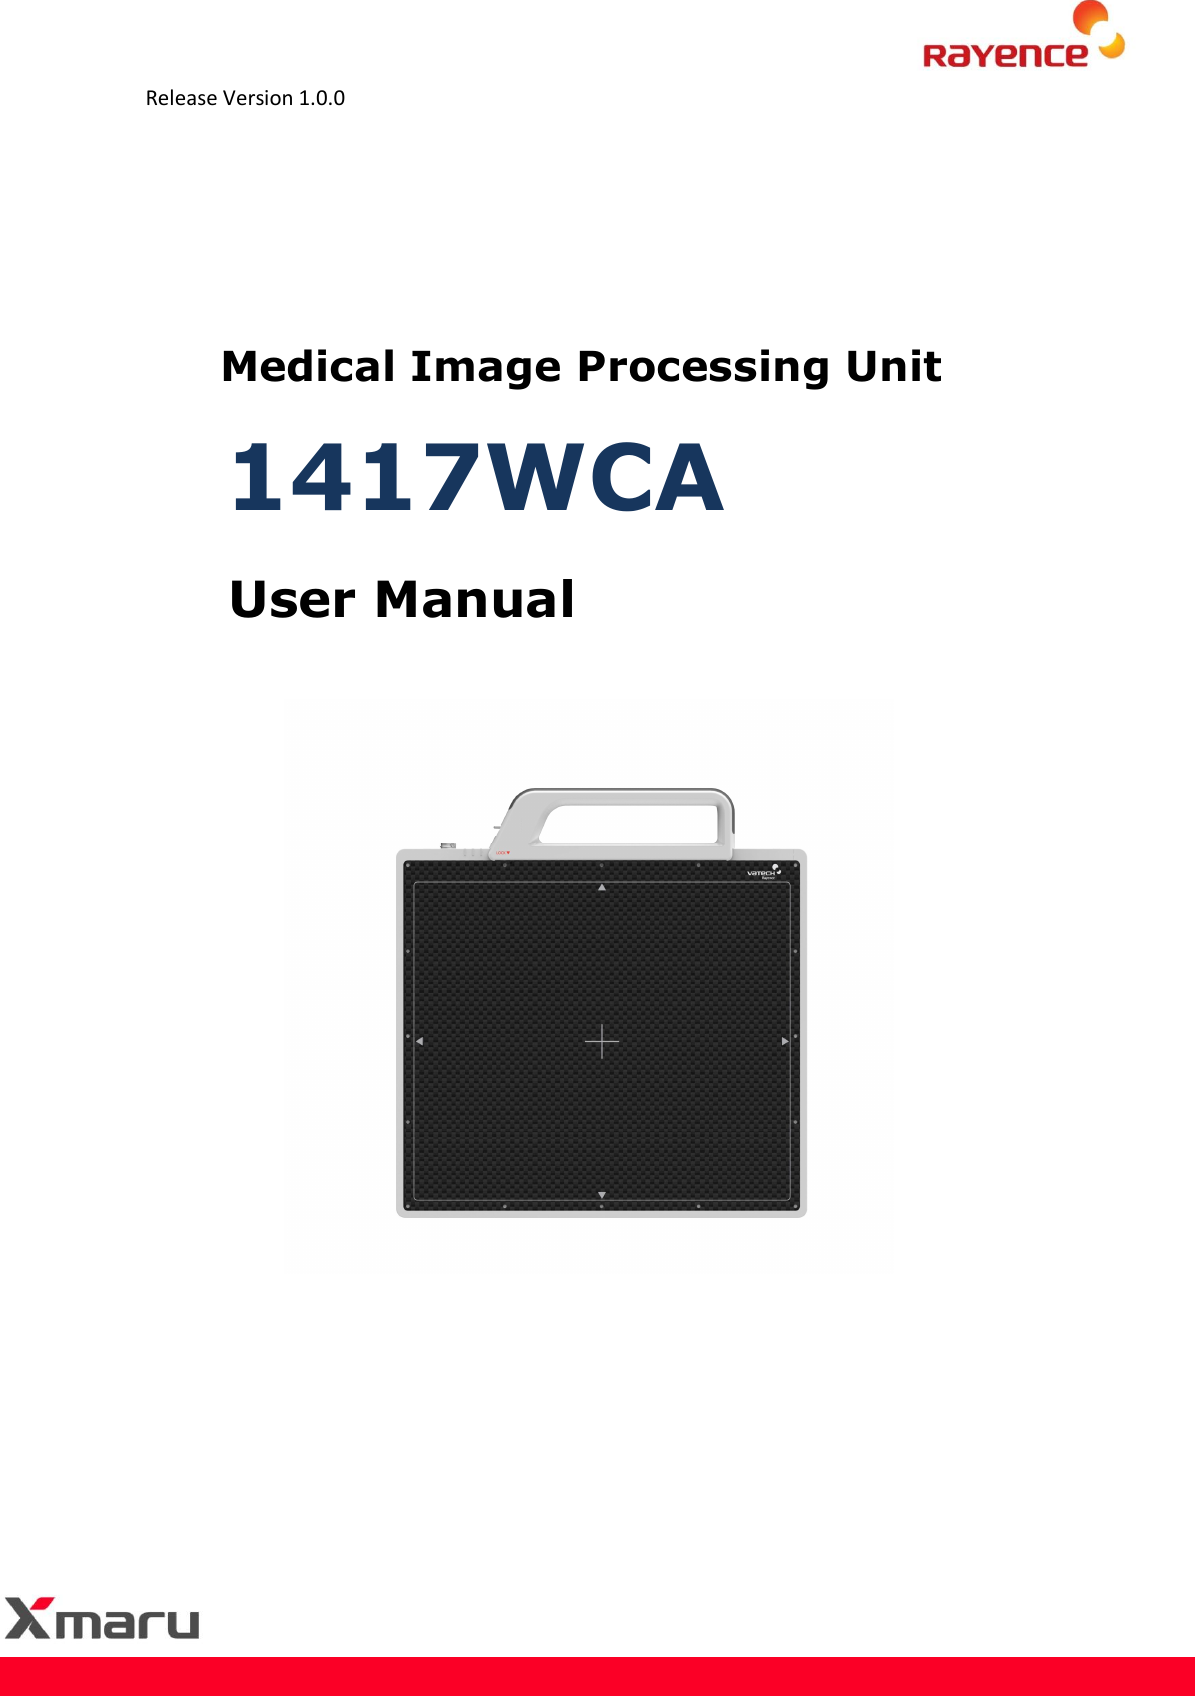        Release Version 1.0.0 Medical Image Processing Unit 1417WCA User Manual 